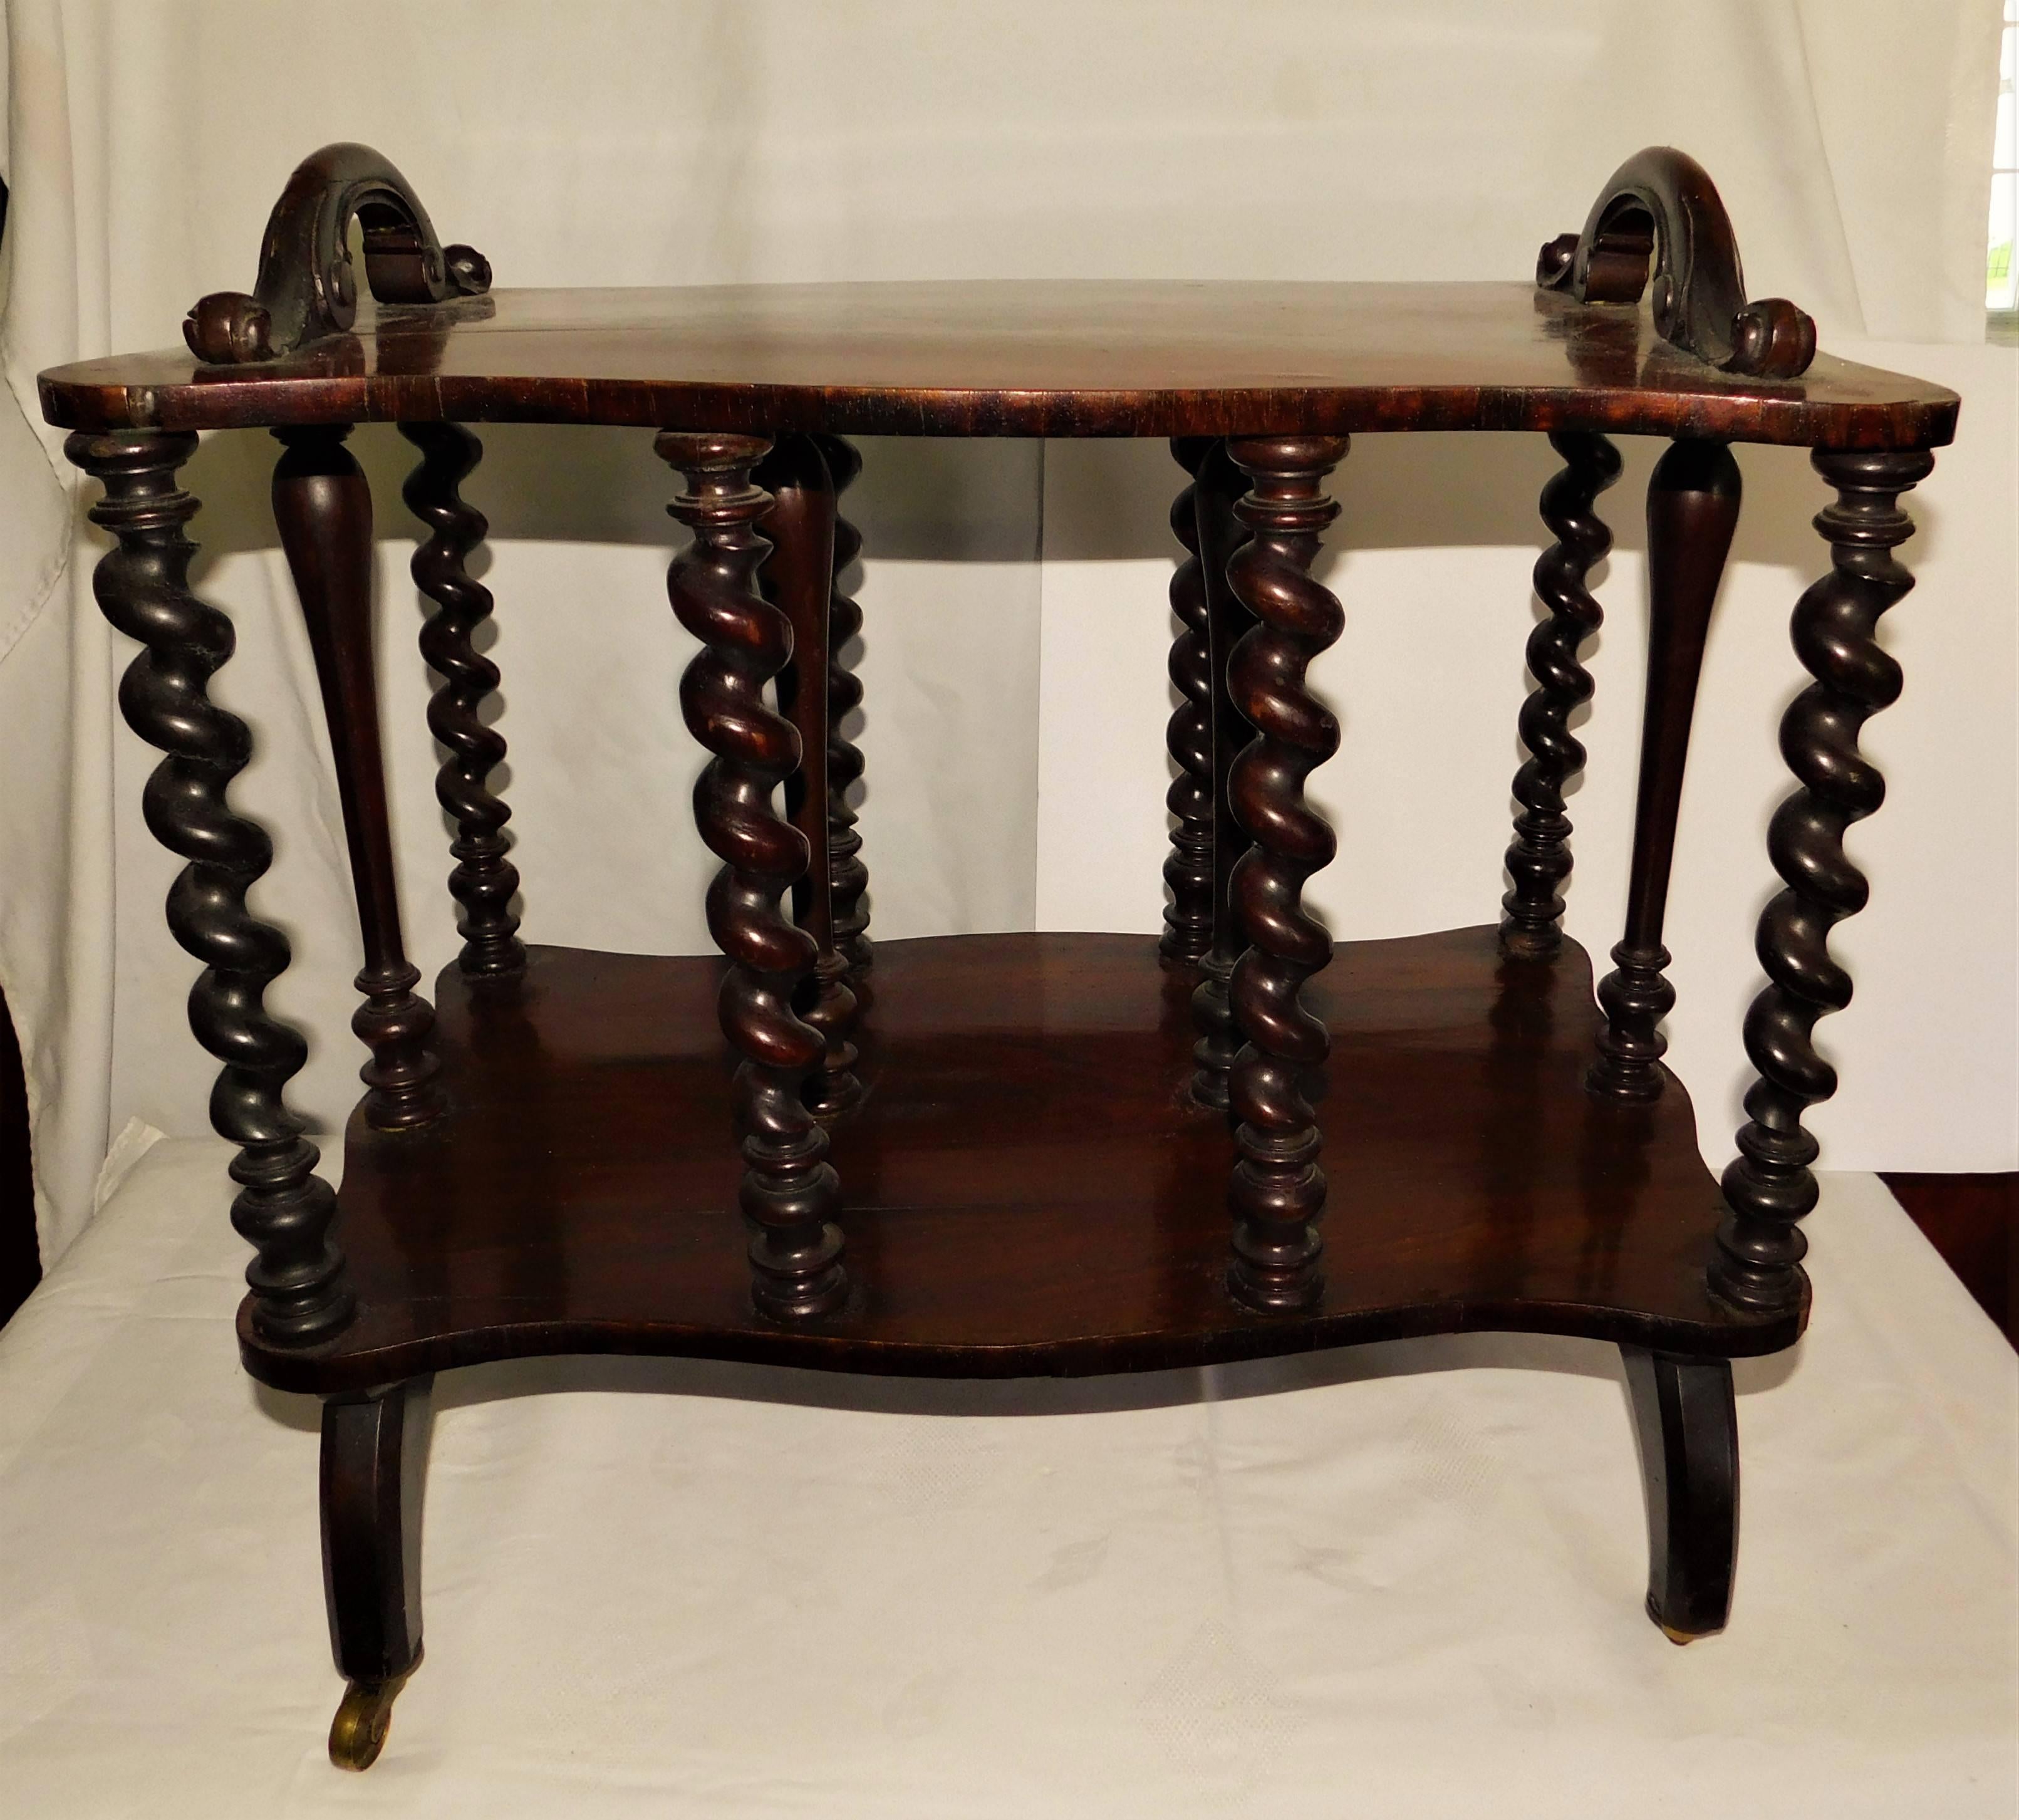 Victorian walnut magazine paper rack table with barley twist columns on castors.